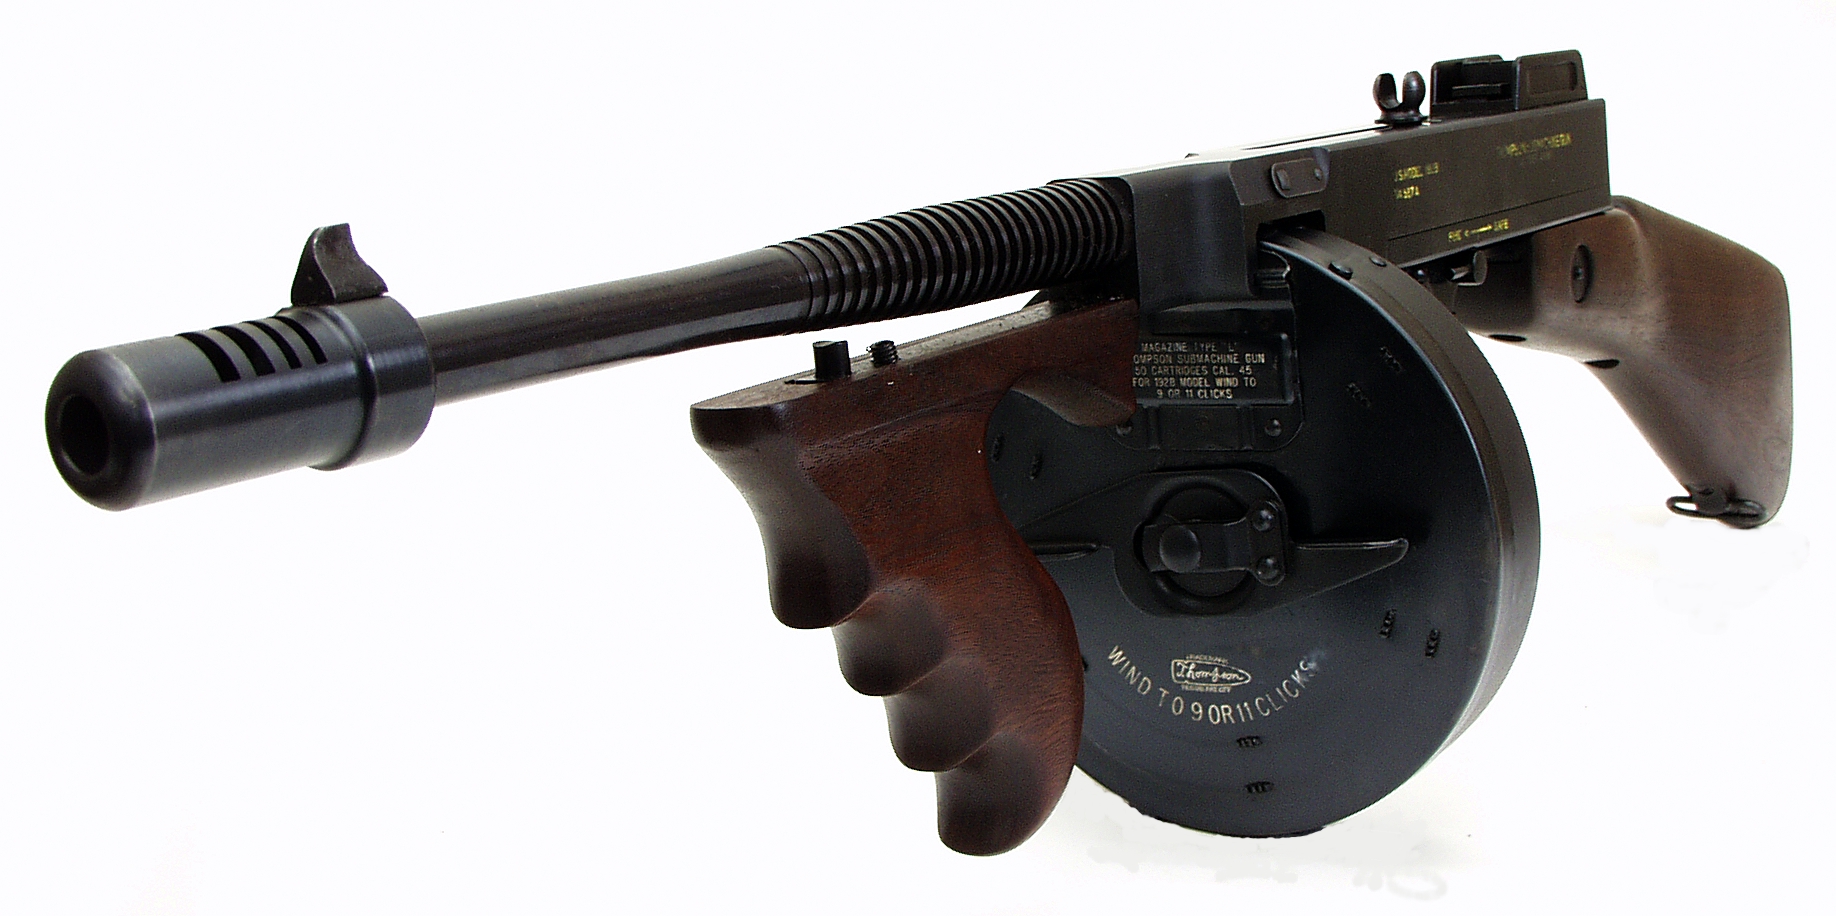 Thompson Submachine Gun Backgrounds, Compatible - PC, Mobile, Gadgets| 1836x916 px